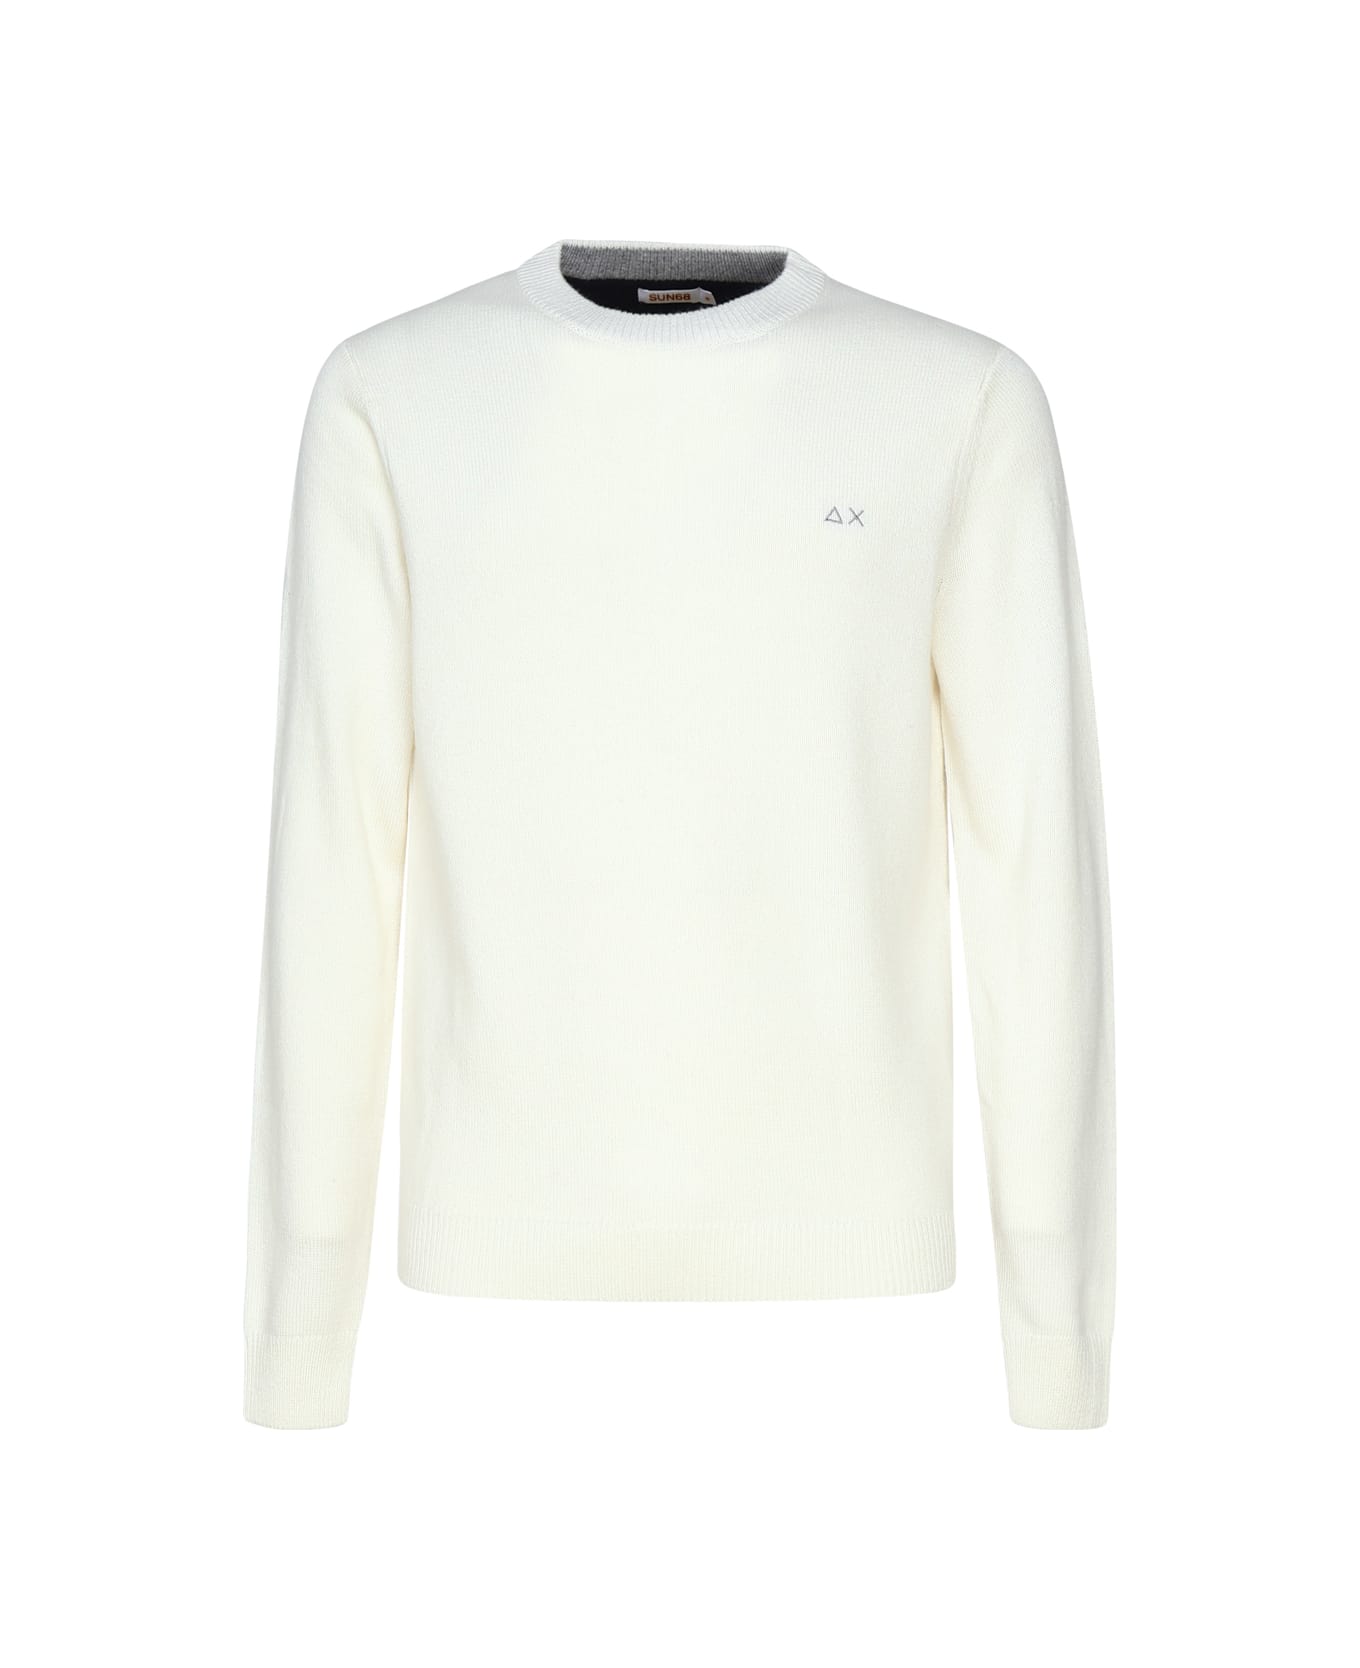 Sun 68 Round Wool Blend Sweater - White